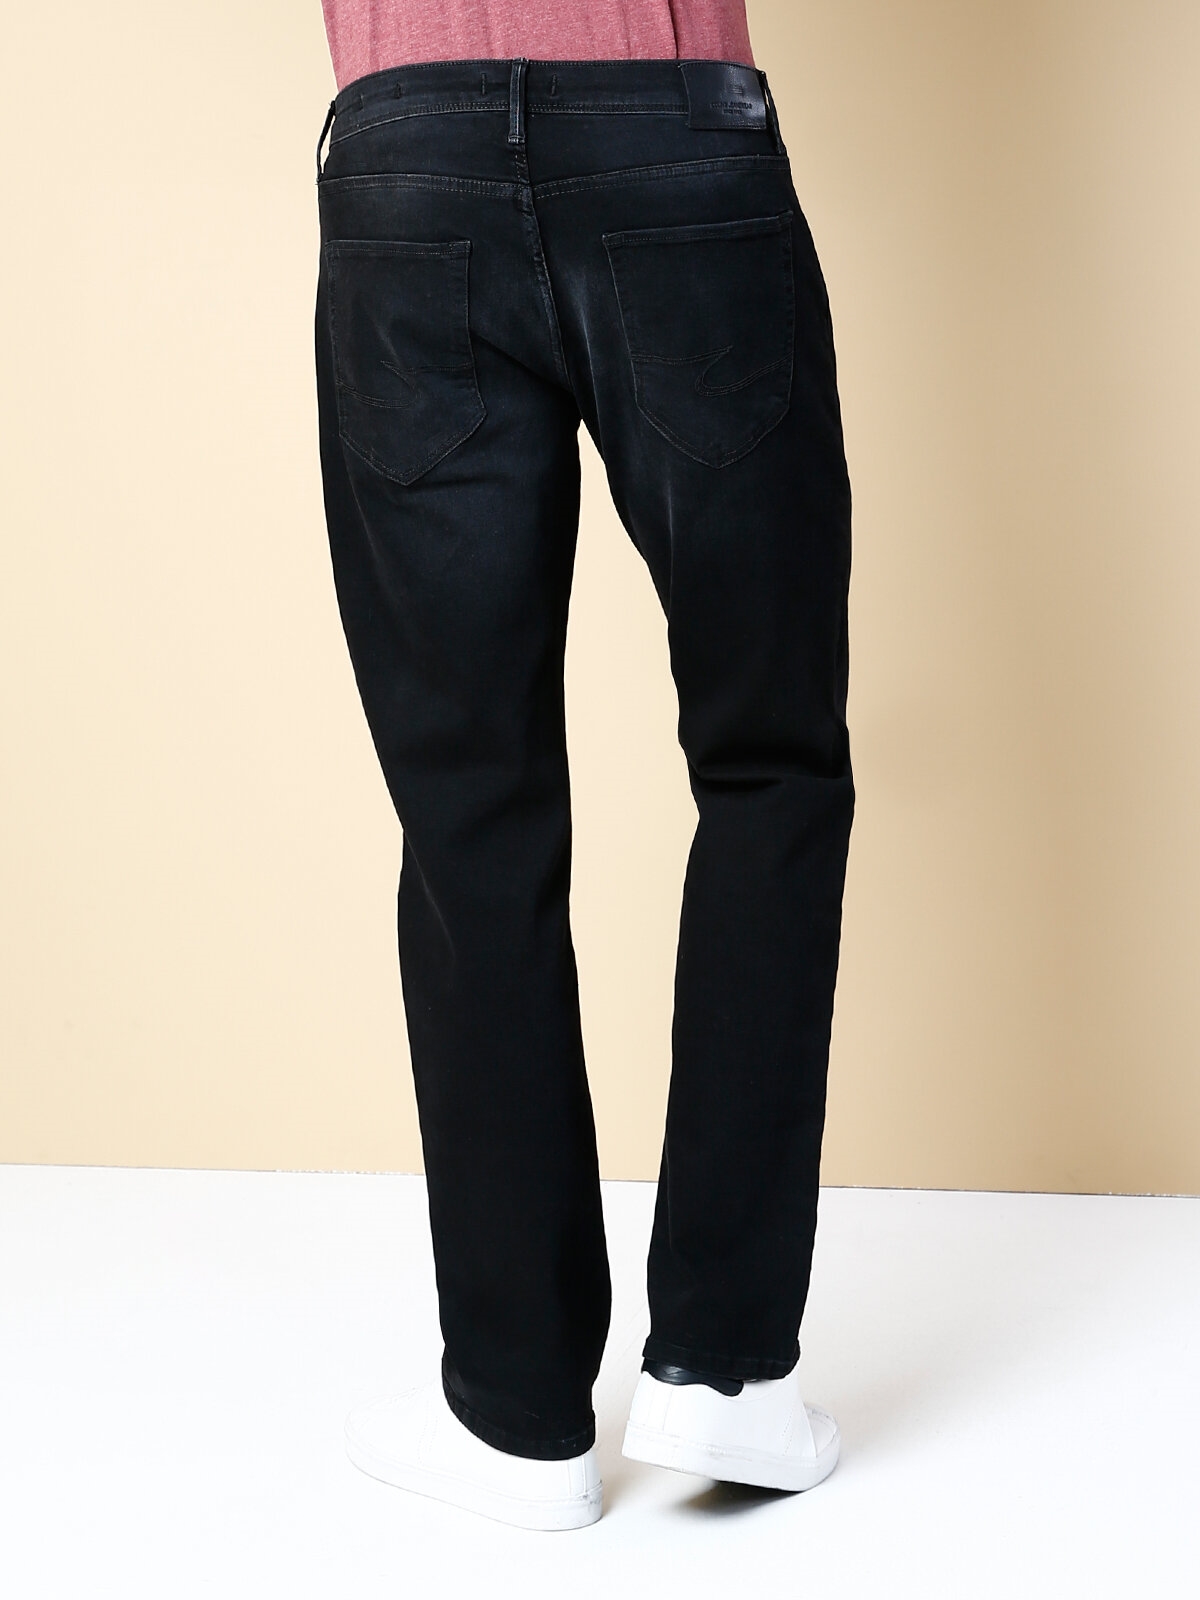 Afișați detalii pentru Negru Barbati Pantaloni Regular Fit-Medium Rise-Tapered Leg